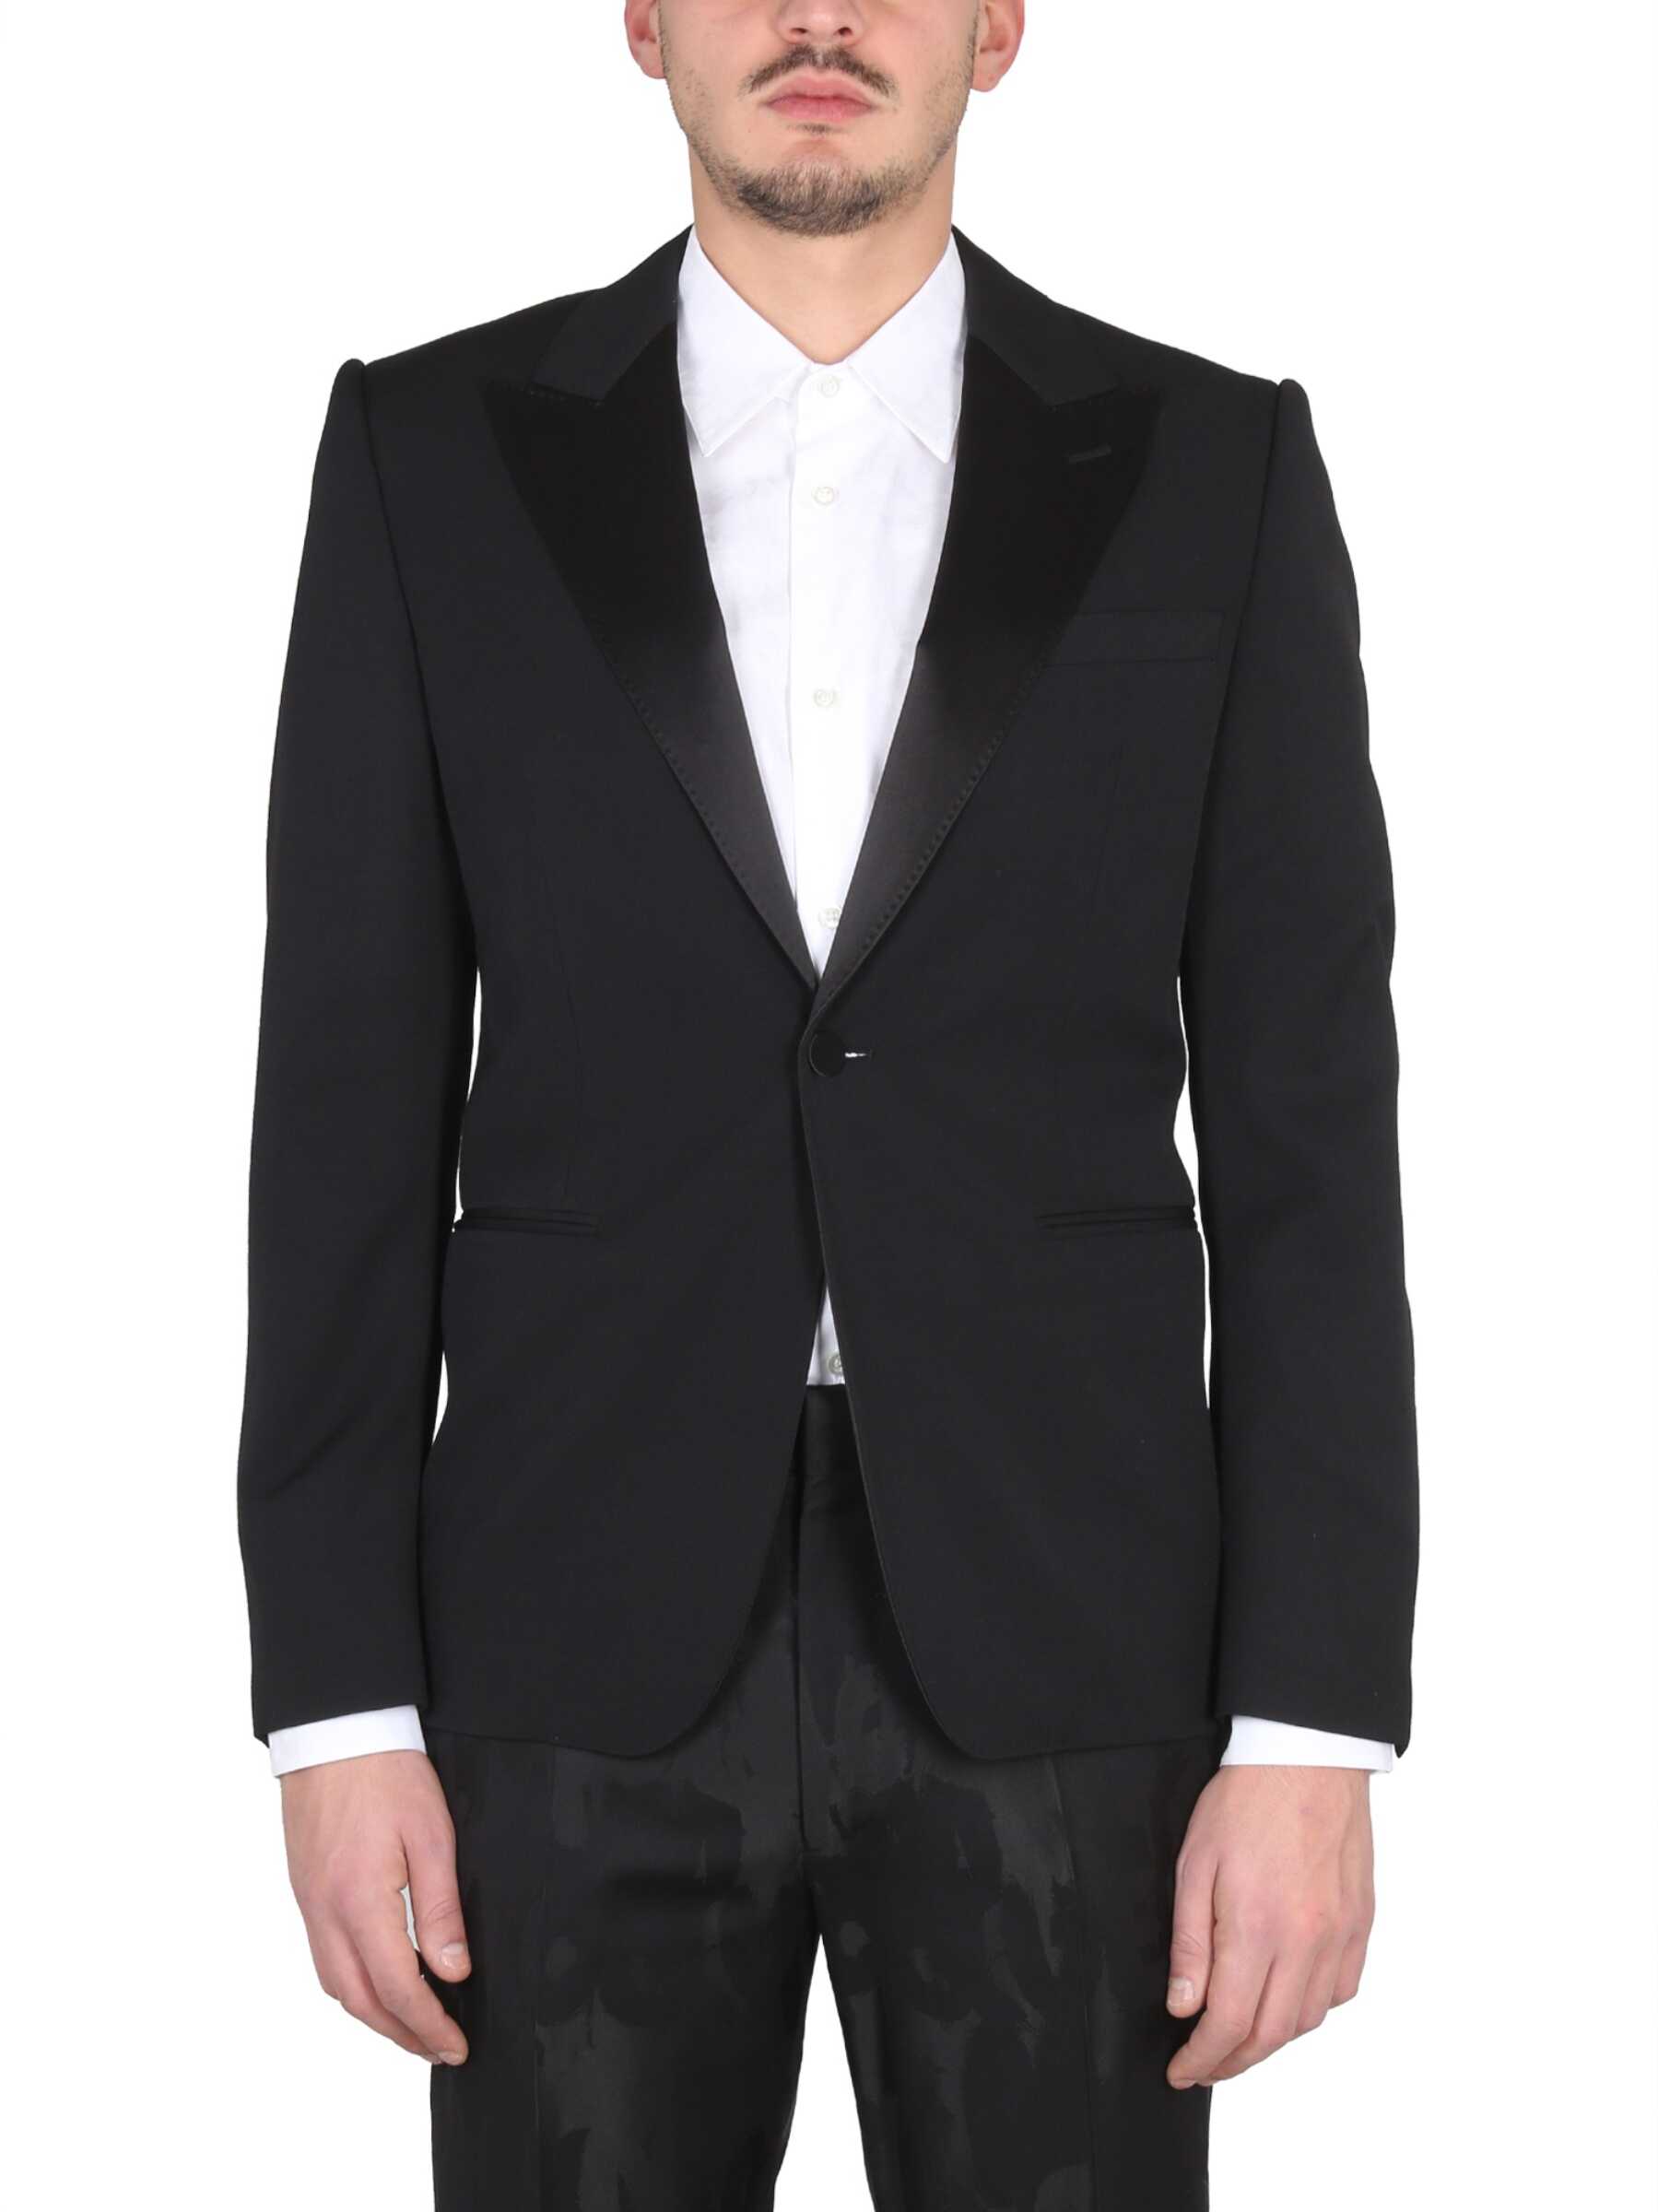 Alexander McQueen Single-Breasted Suit Jacket BLACK Alexander